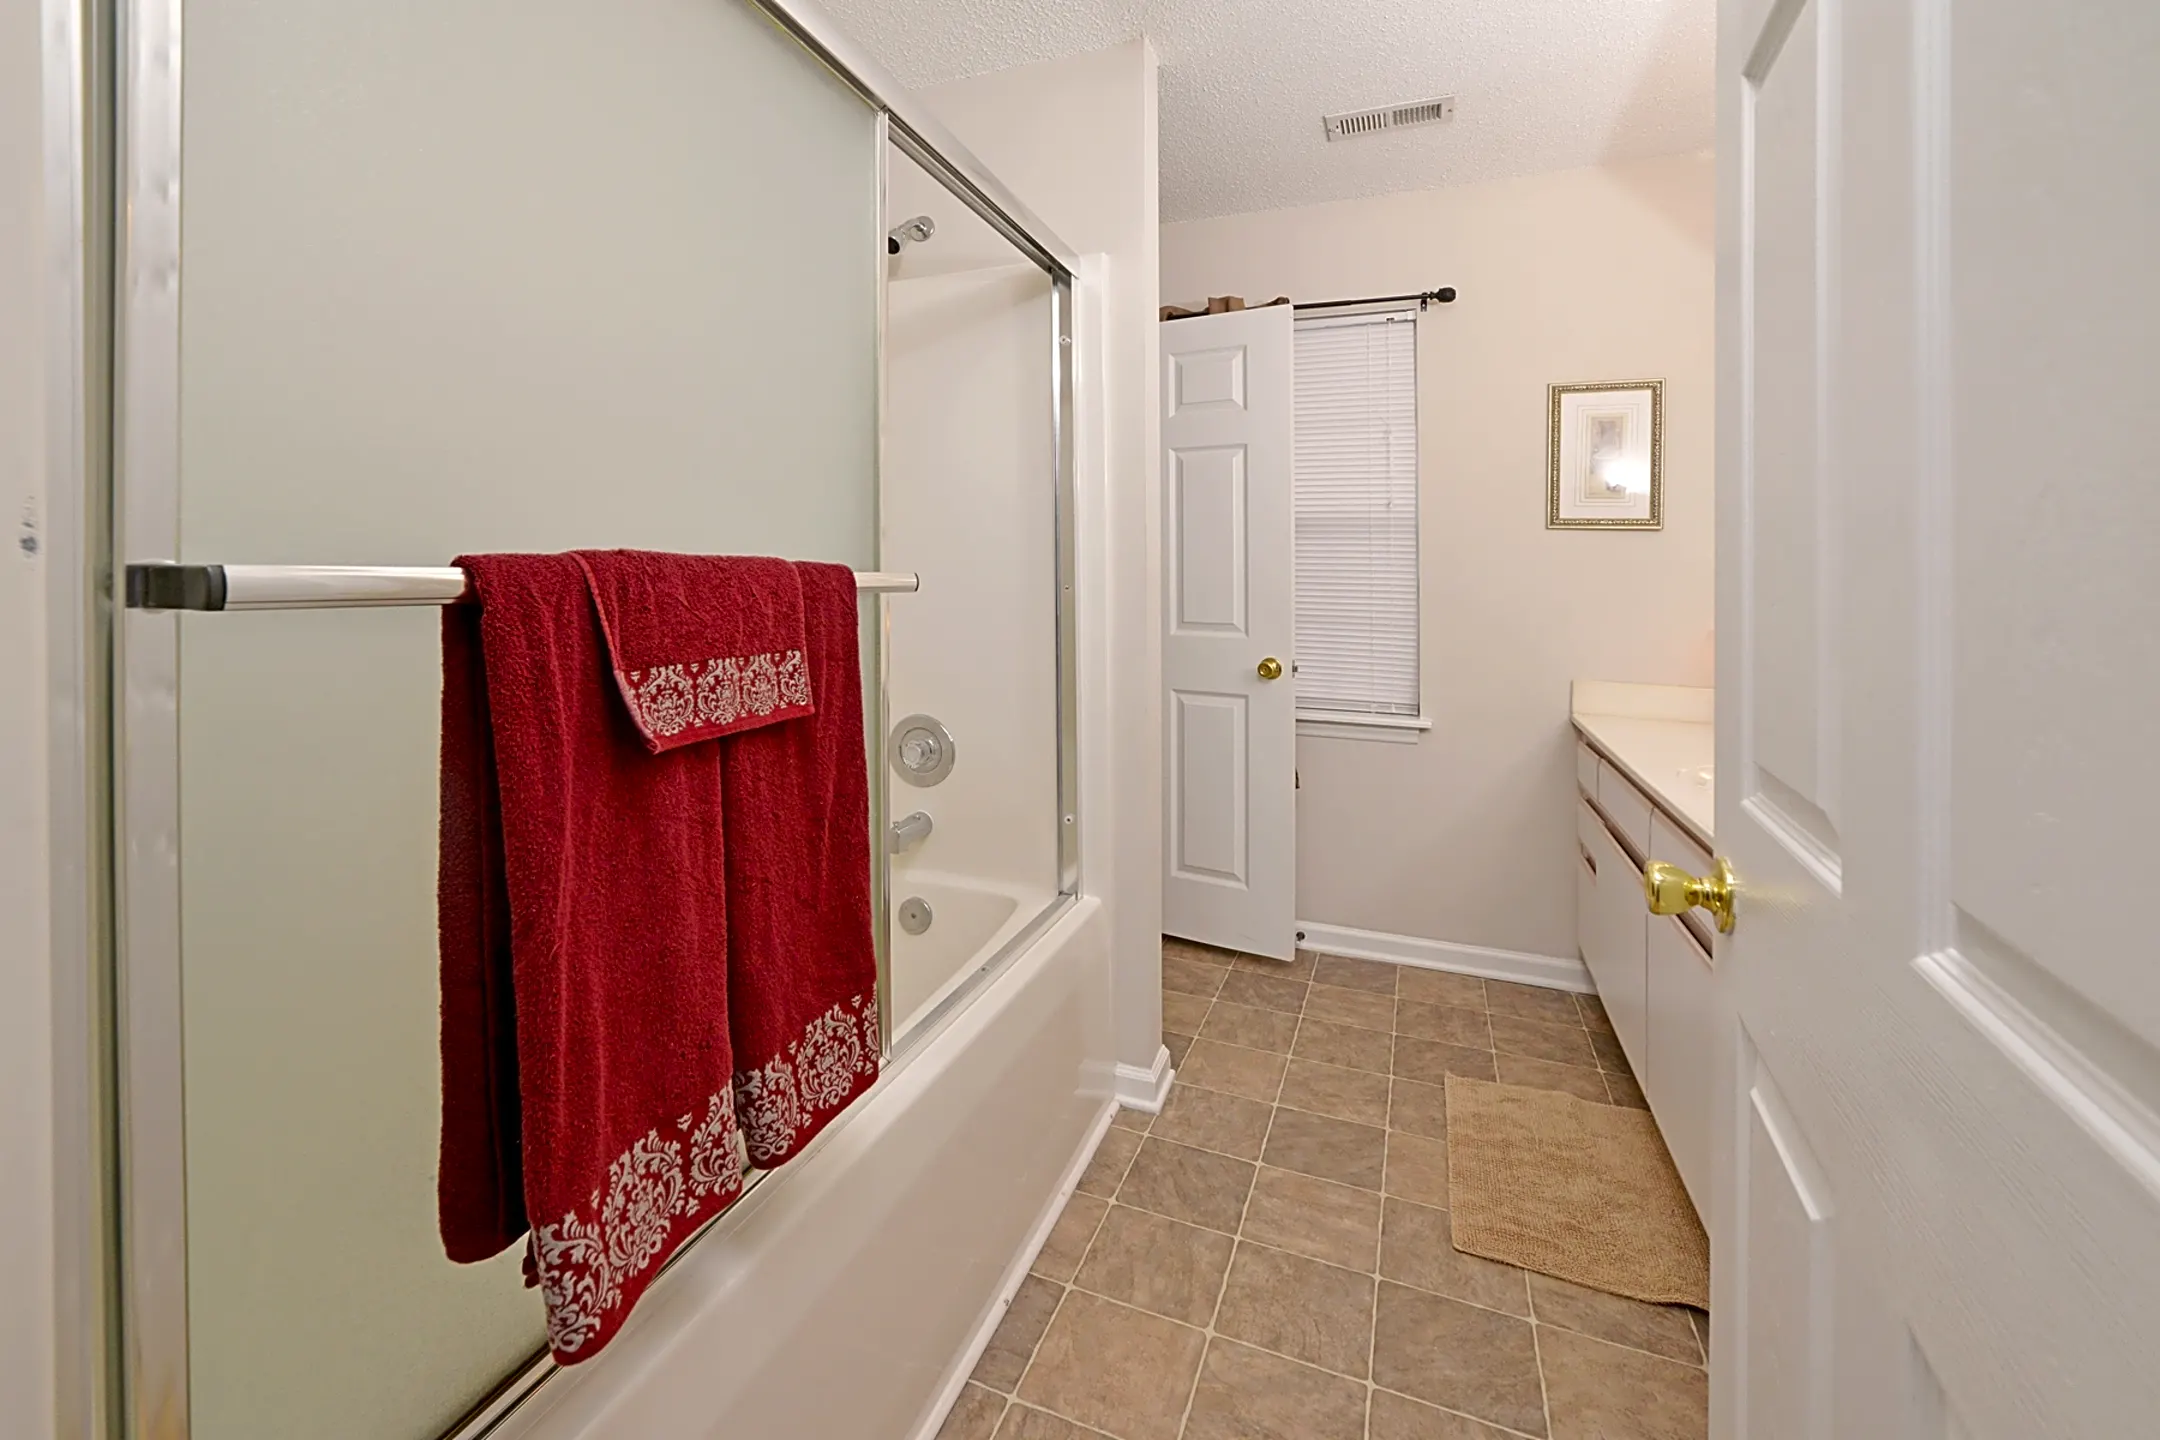 Bathroom - Meridian Park Apartments - Greenville, NC